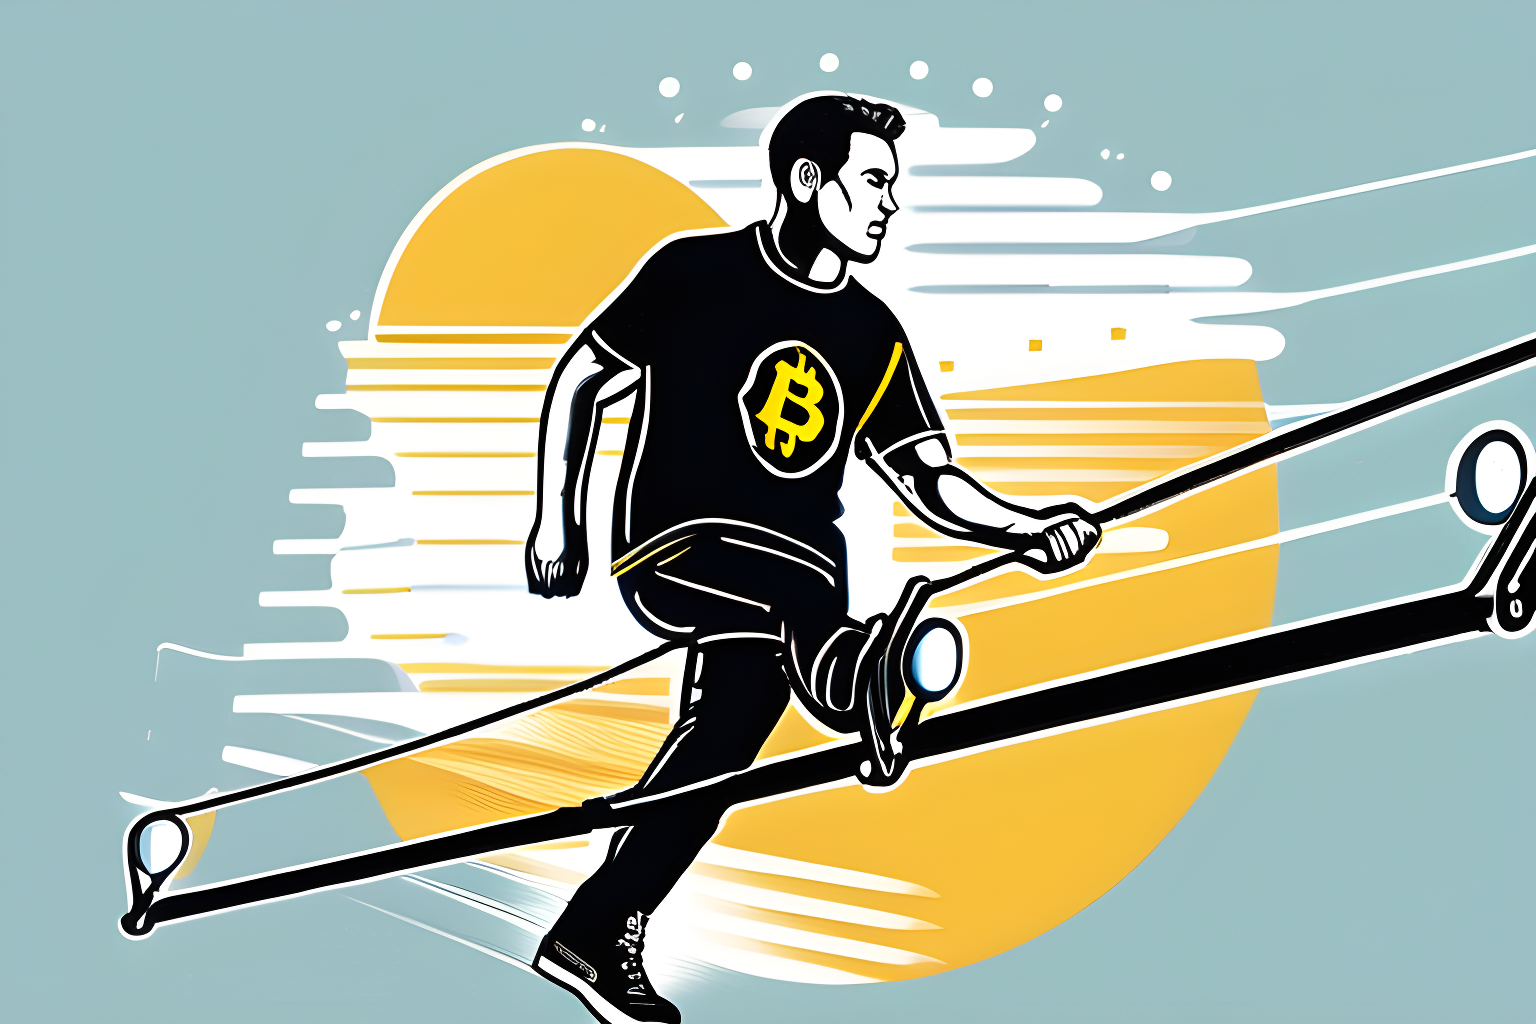 Illustrate a man, wearing a binance t-shirt, walking on a tightrope